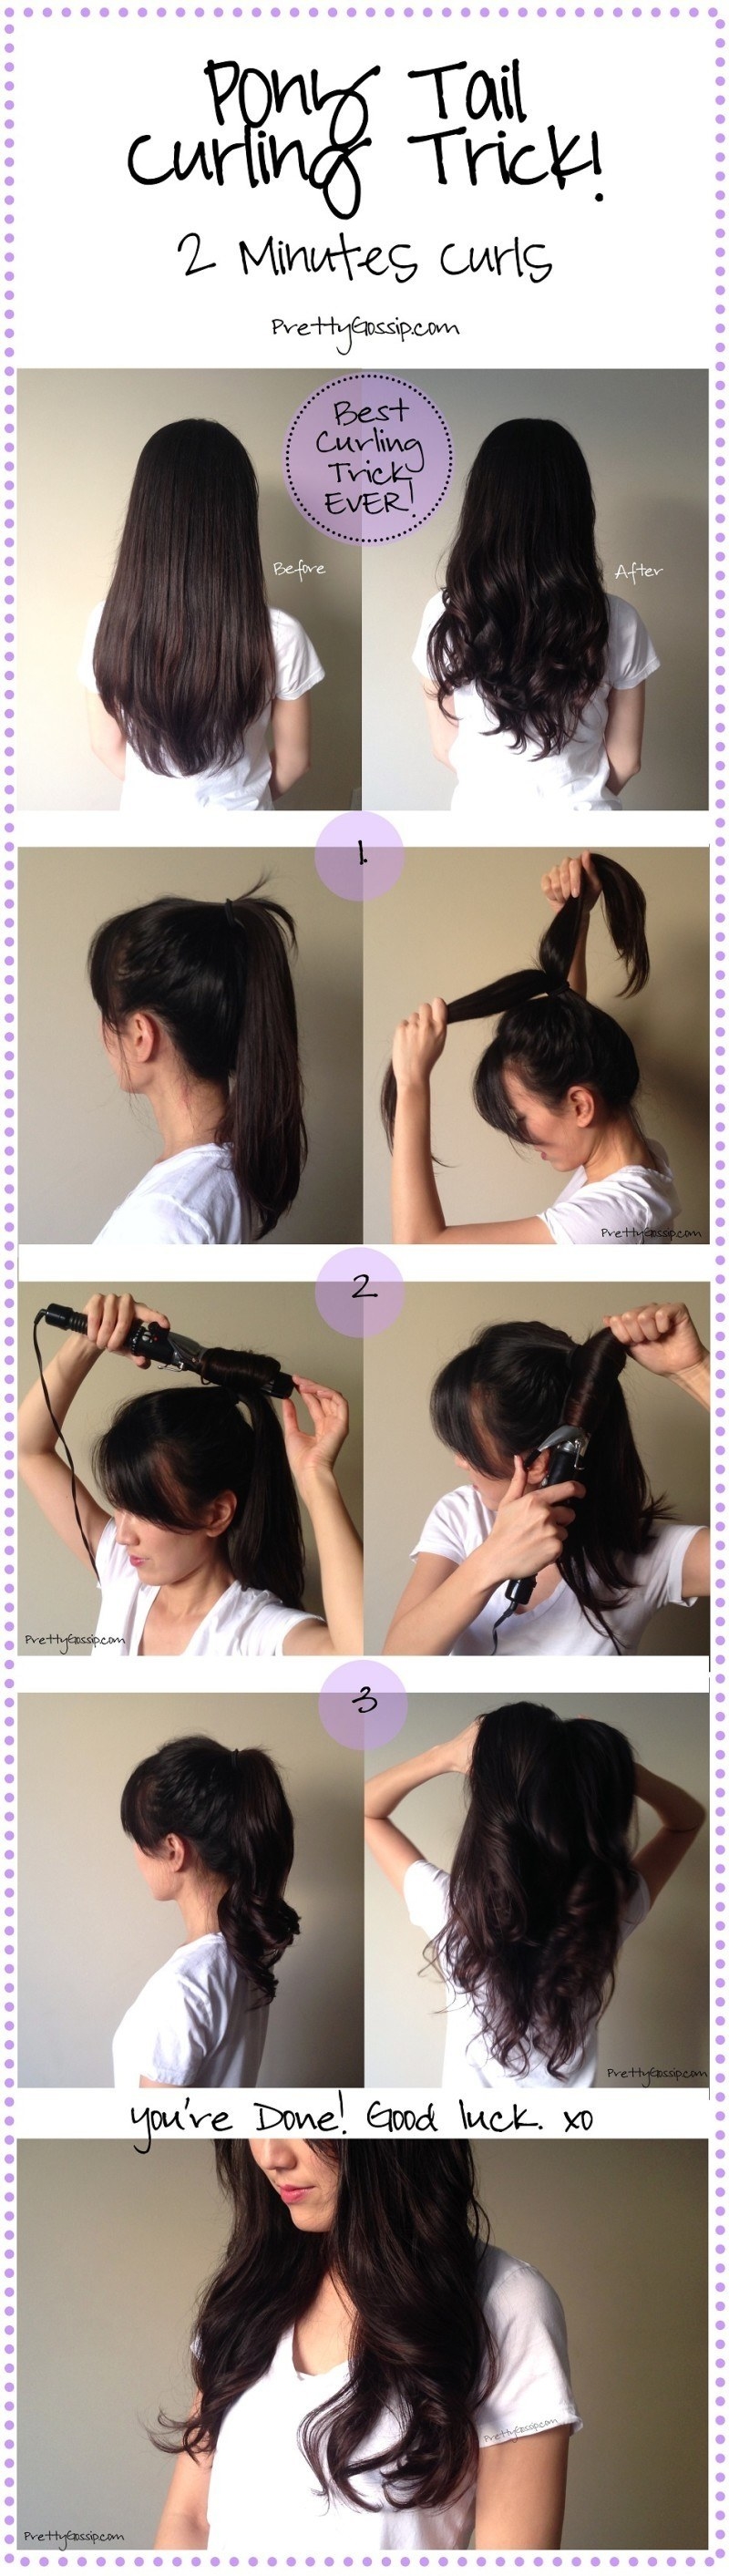 Waterfall Twist Rope Braid by Cute Girls Hairstyles | LDS.net